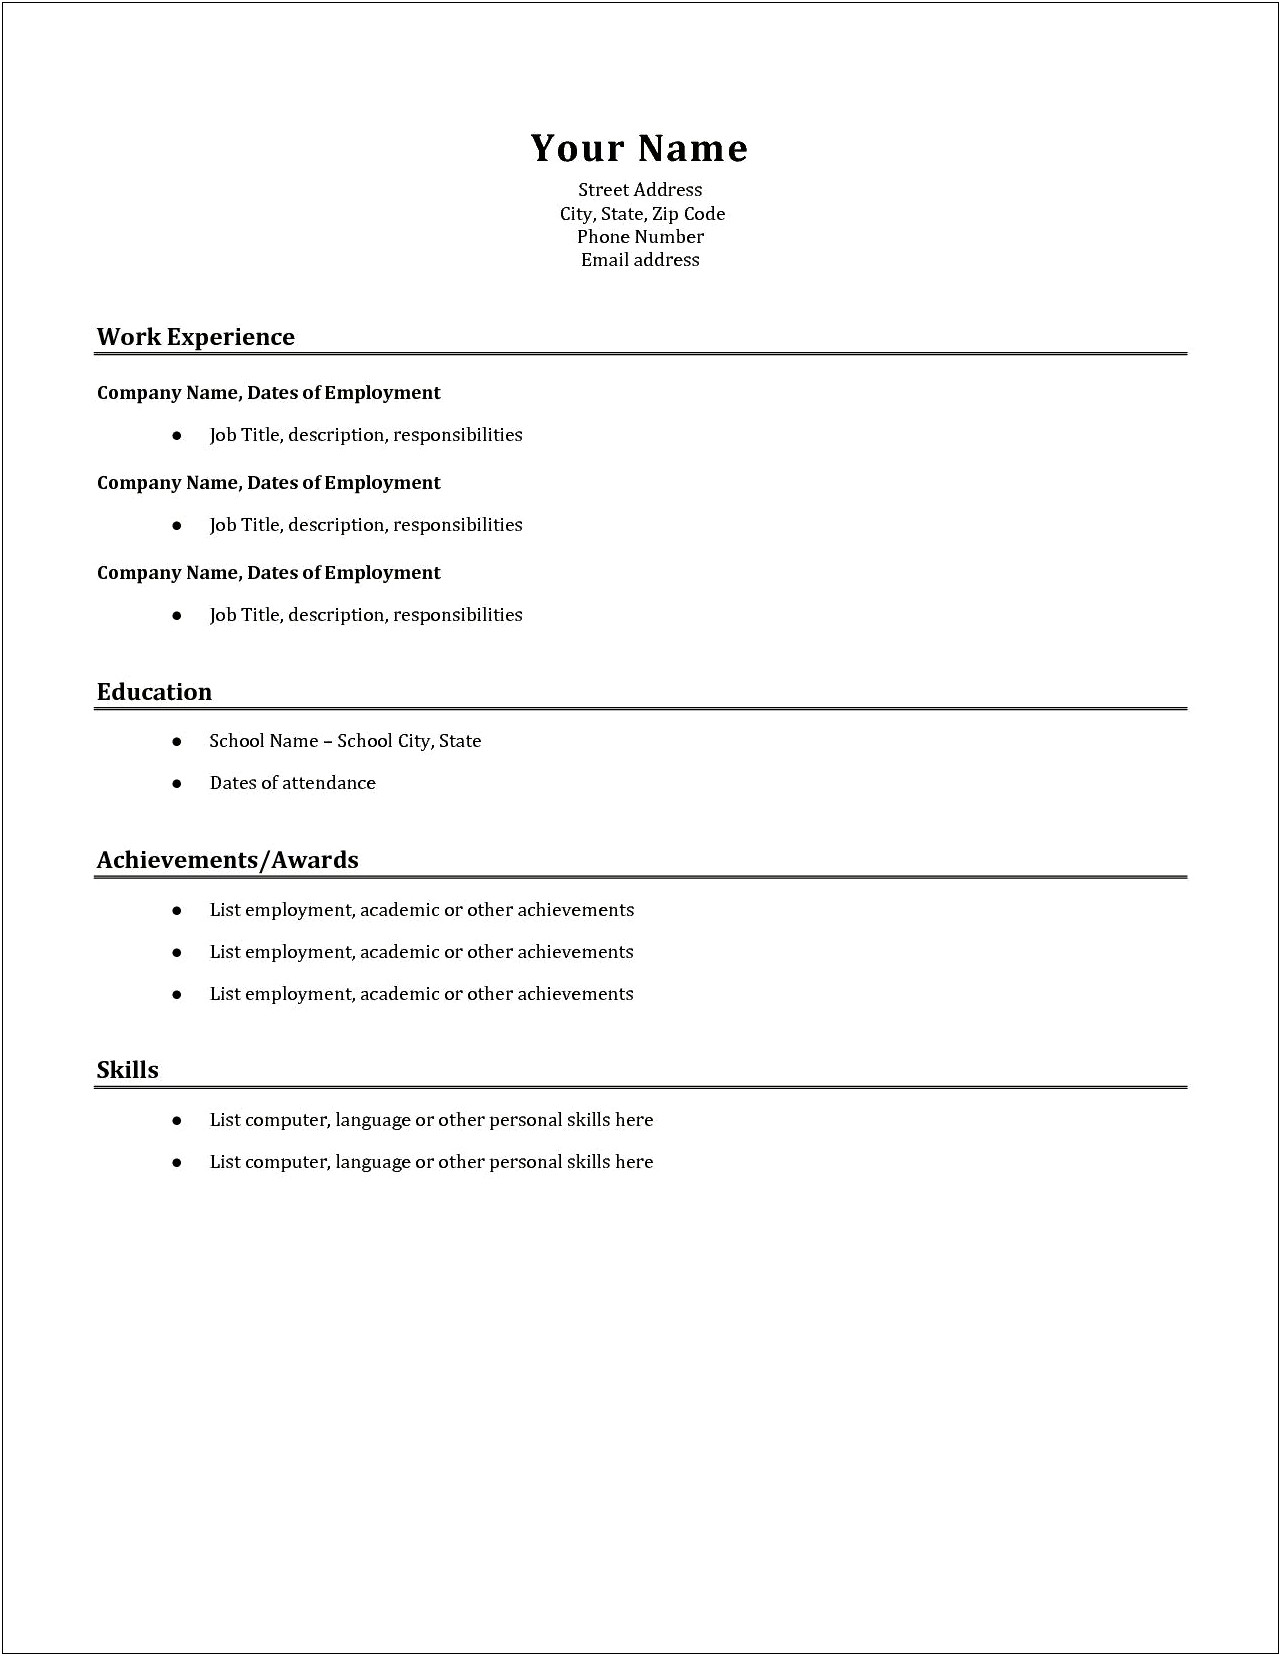 Resume Sample Description Of Responsibilities